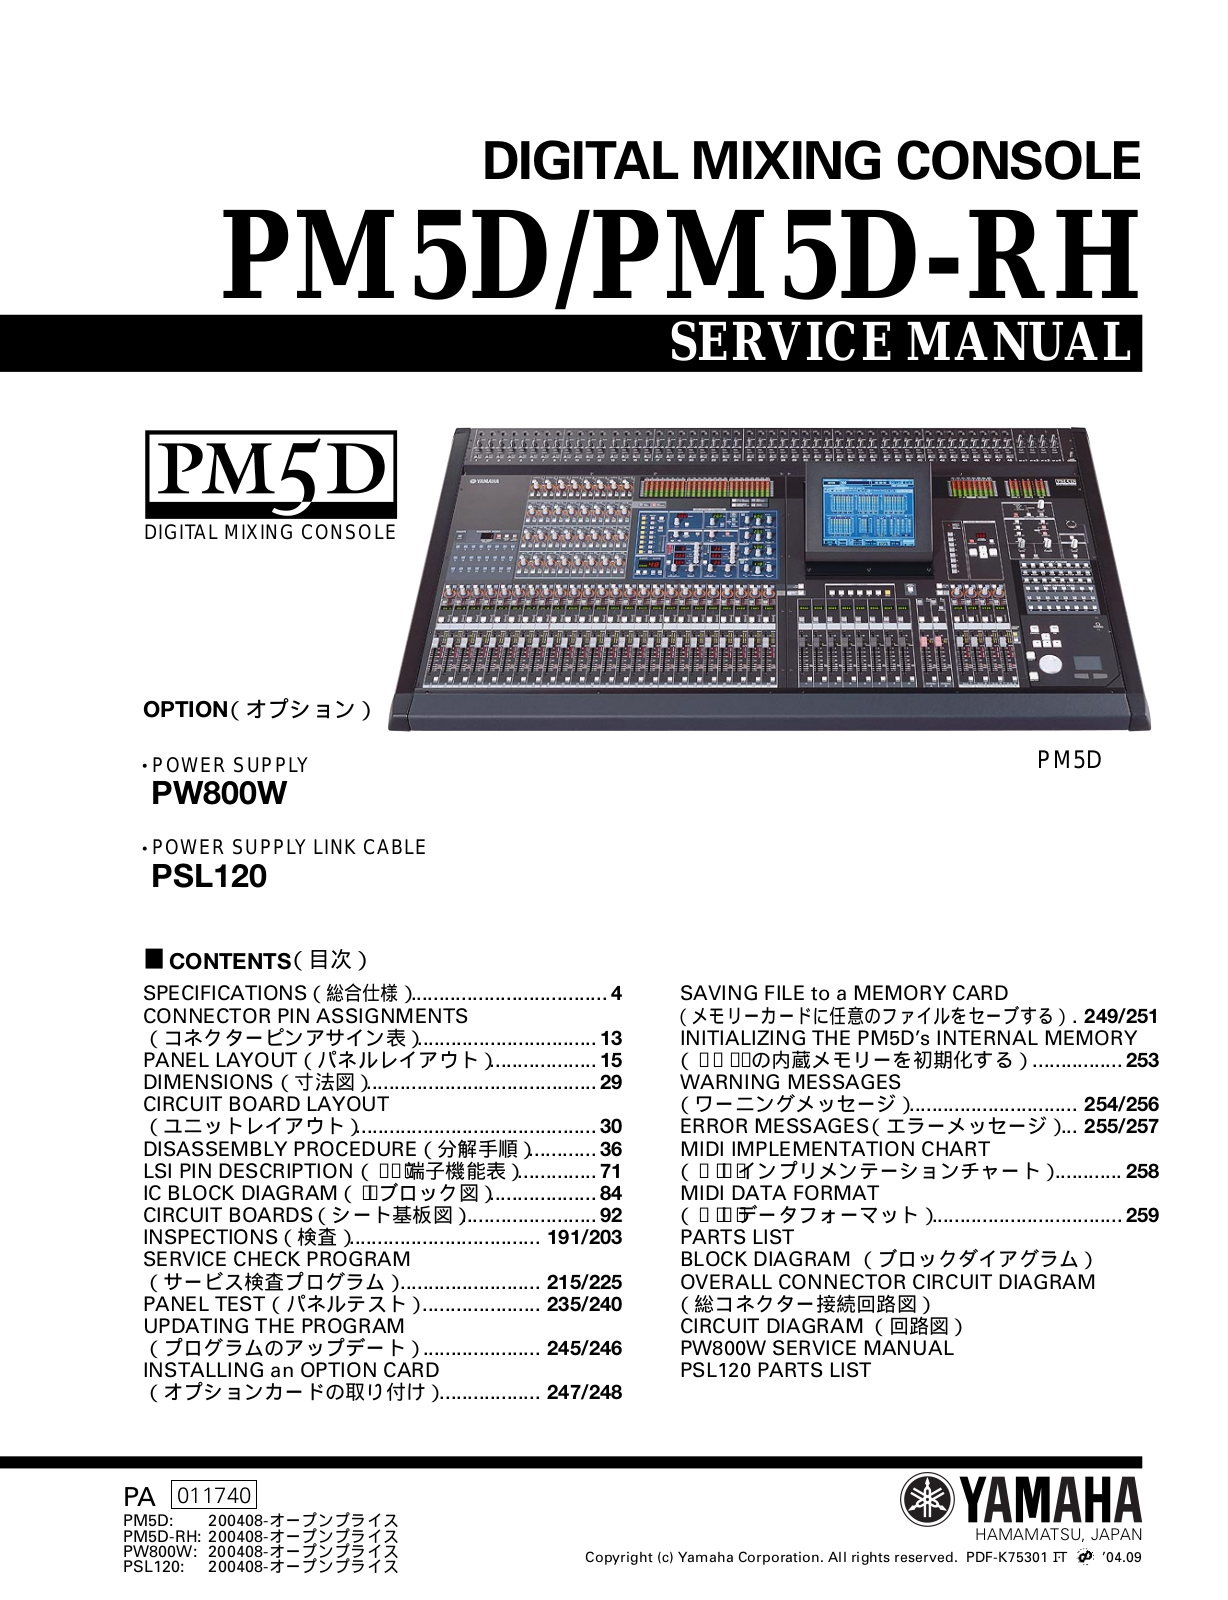 Yamaha PSL120, PW800W, PM5D-RH, PM5D Service Manual